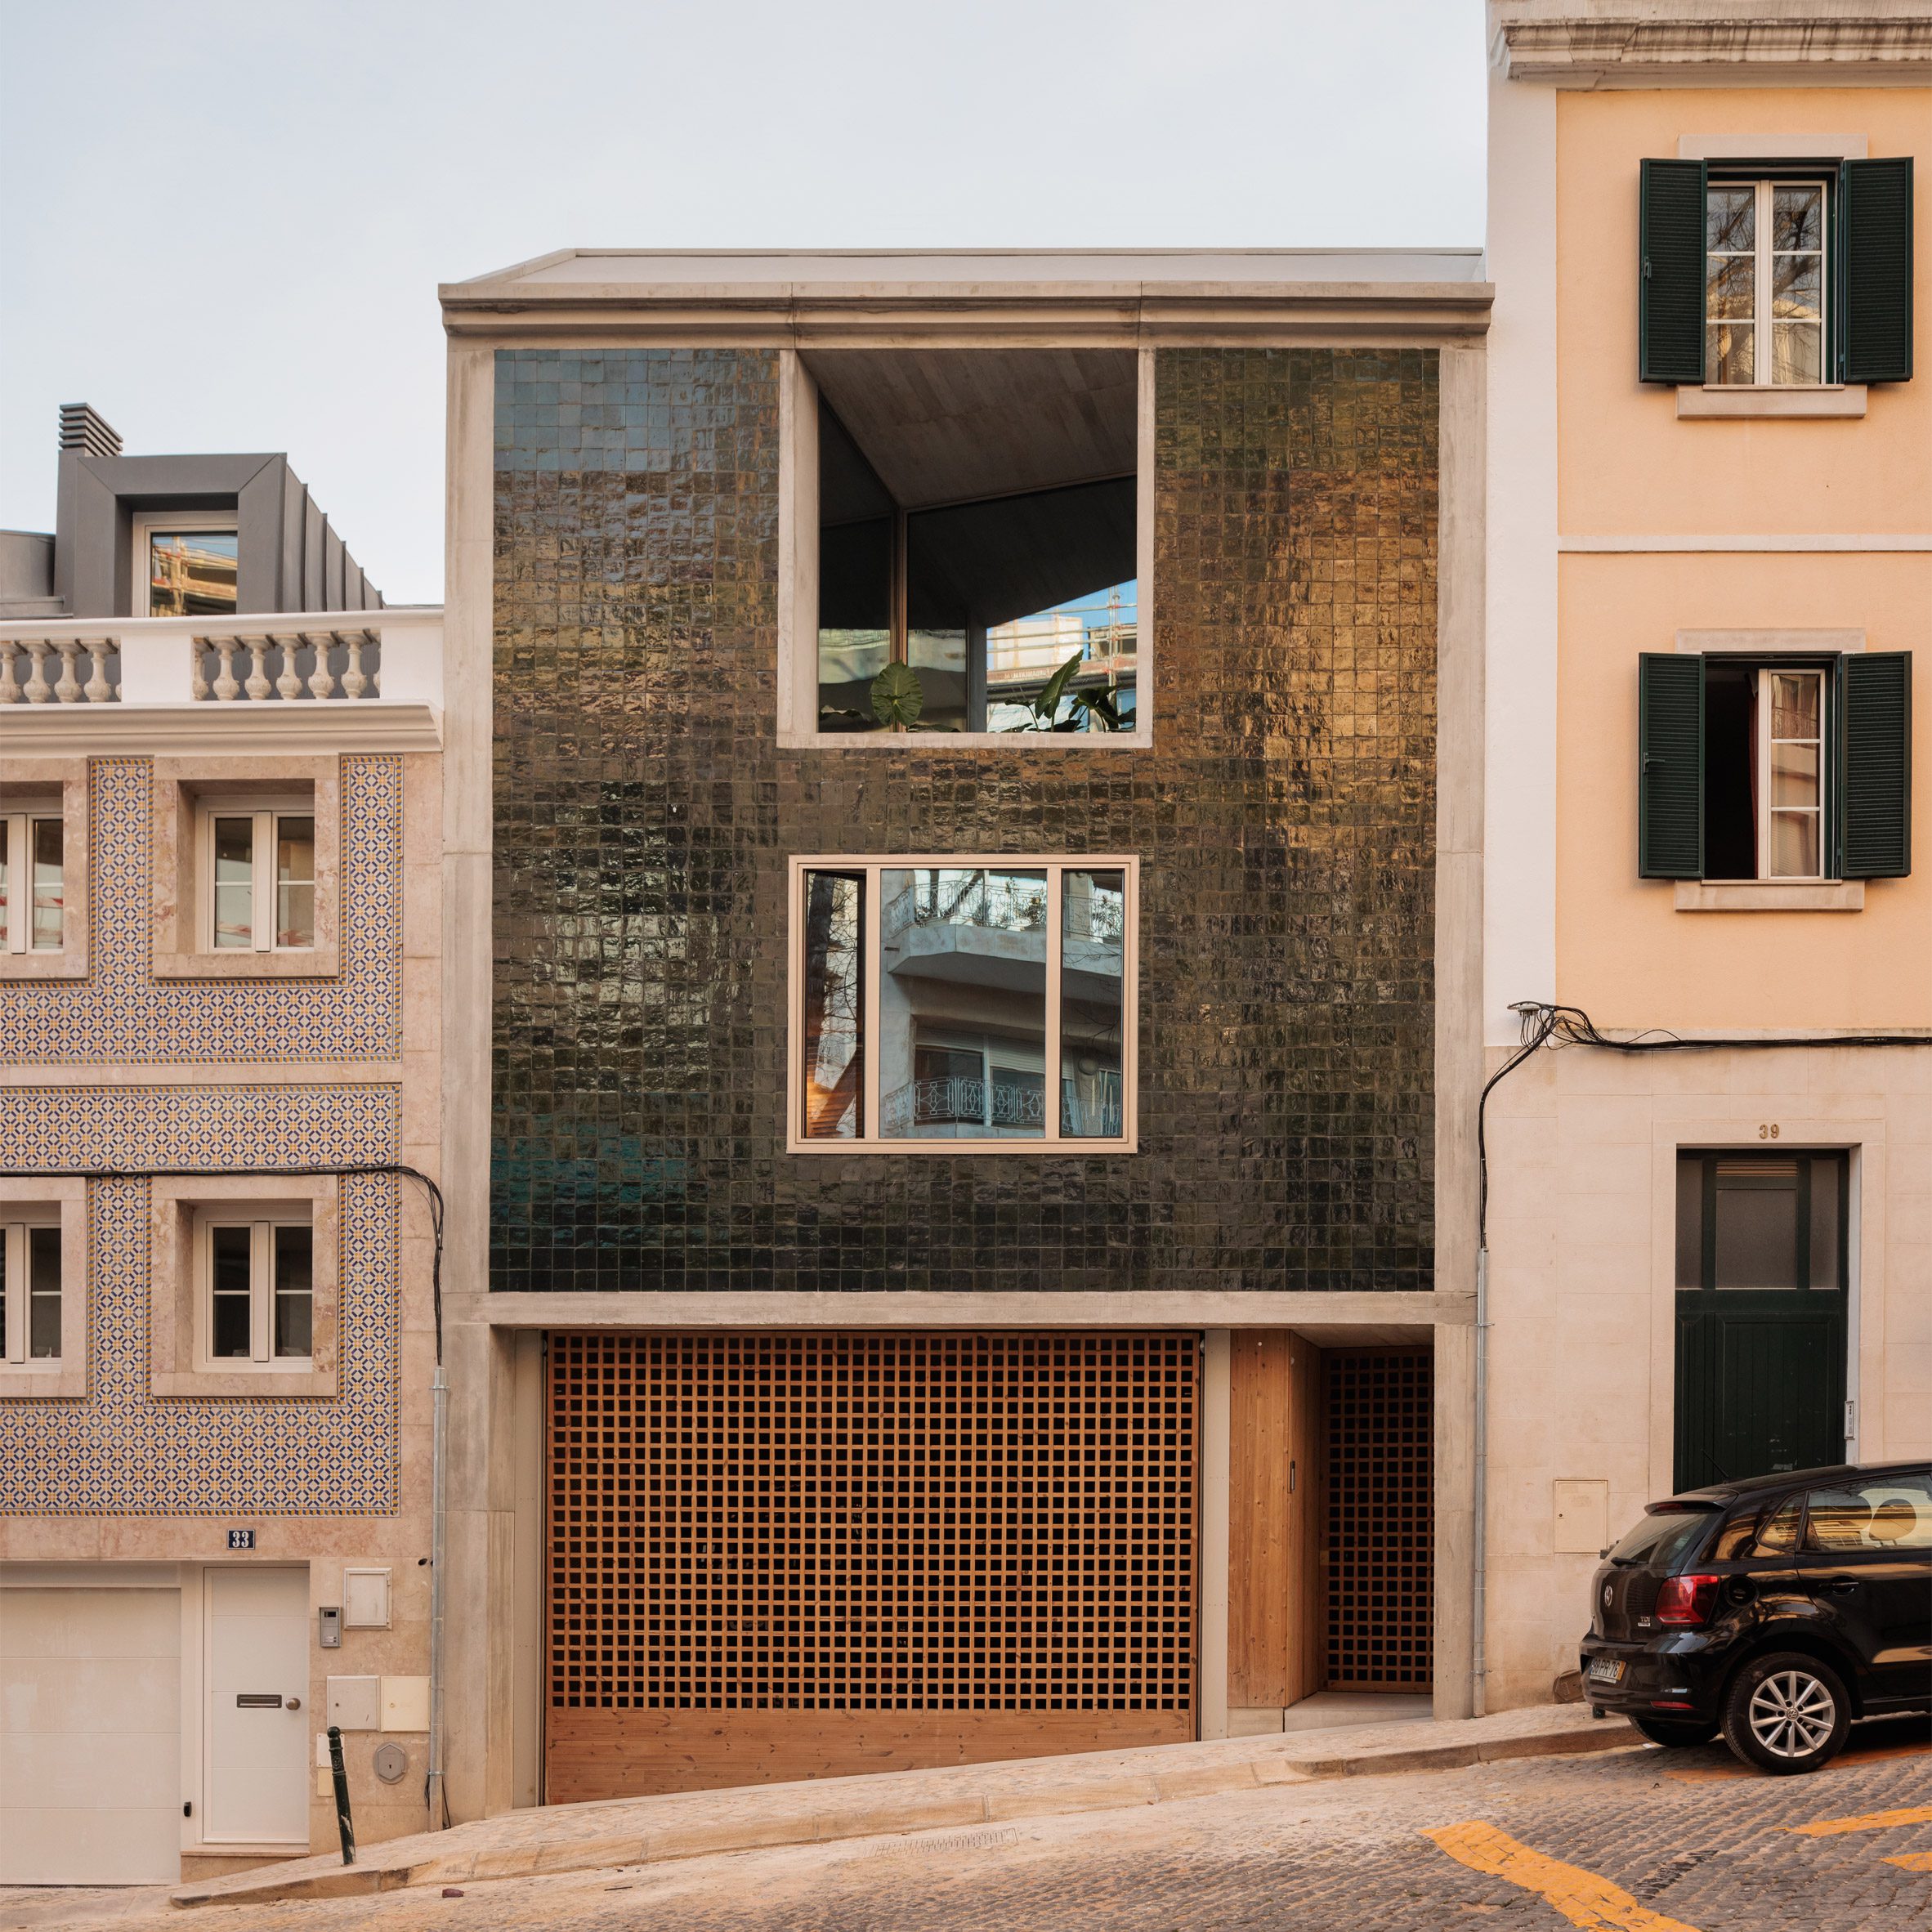 Concrete house decorated in green tiles in Lisbon by Bak Gordon Arquitectos